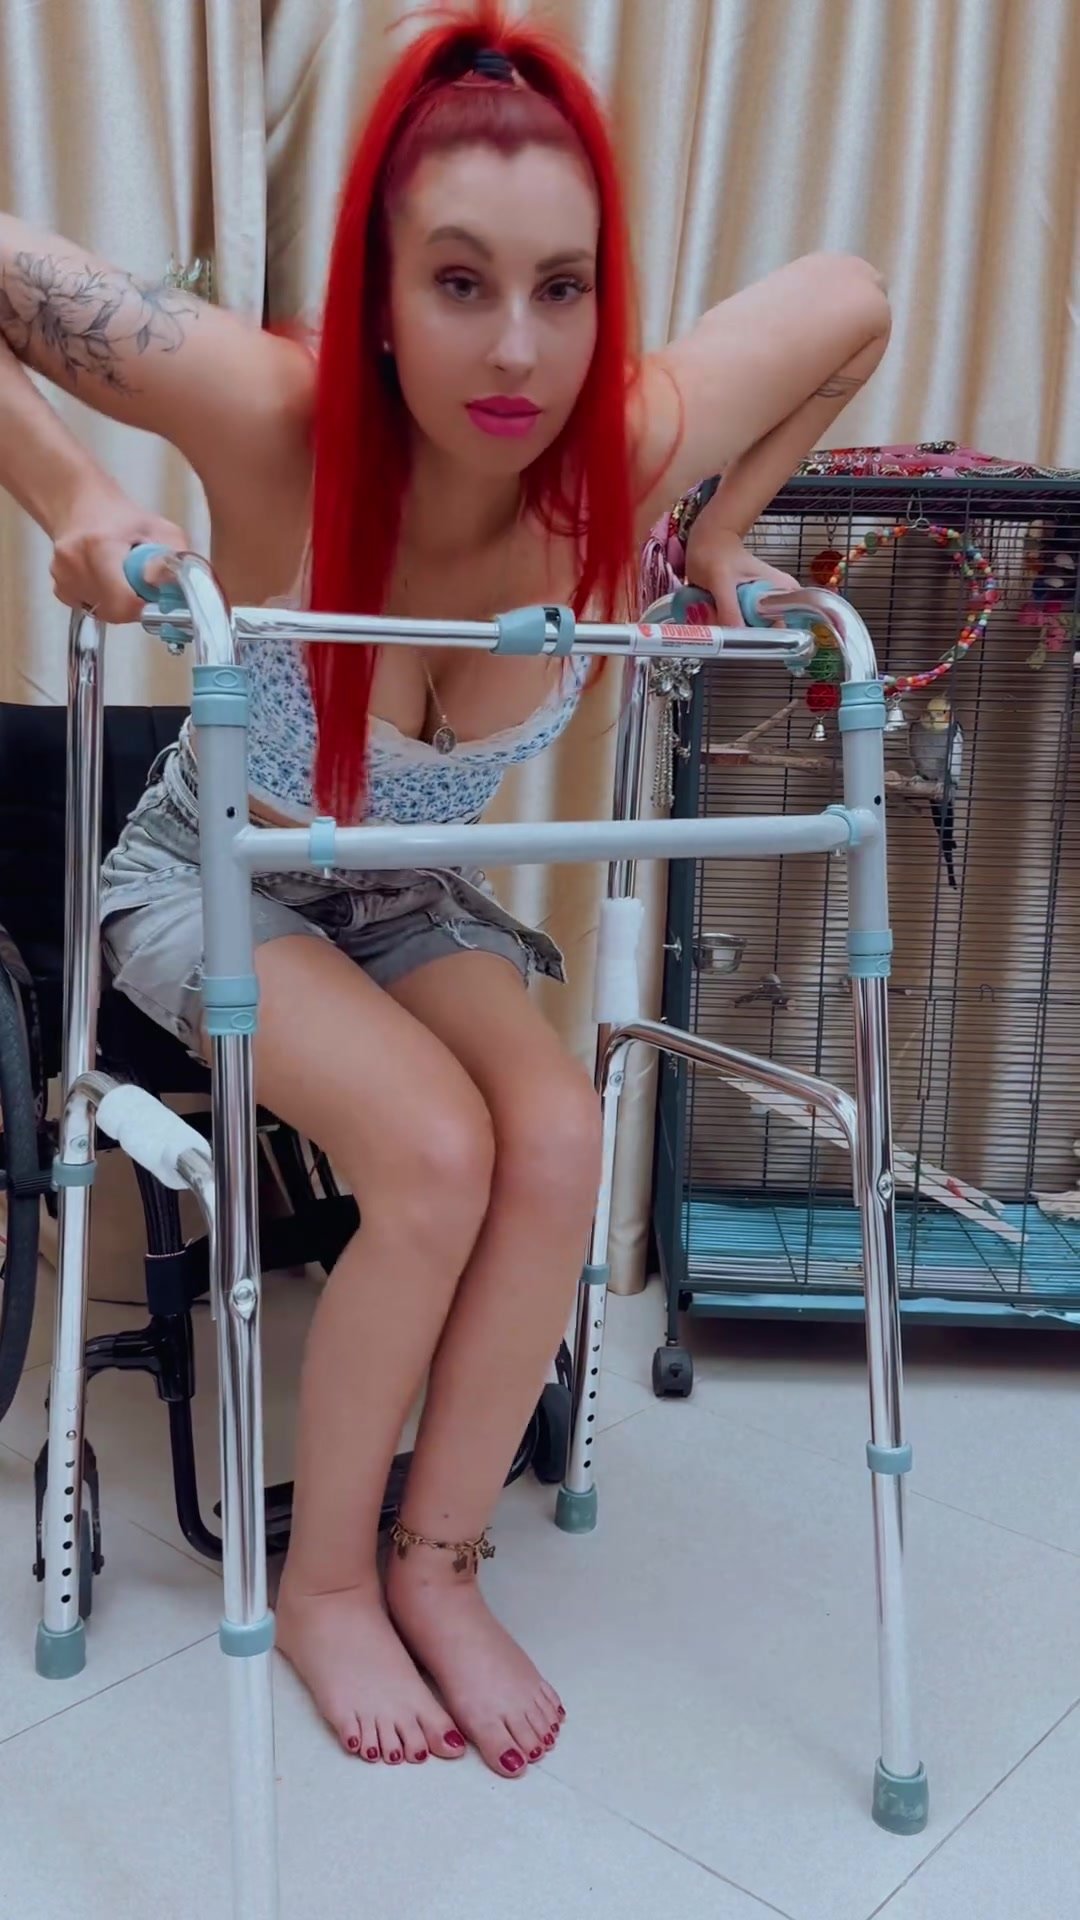 Beautiful redhead paraplegic stands up